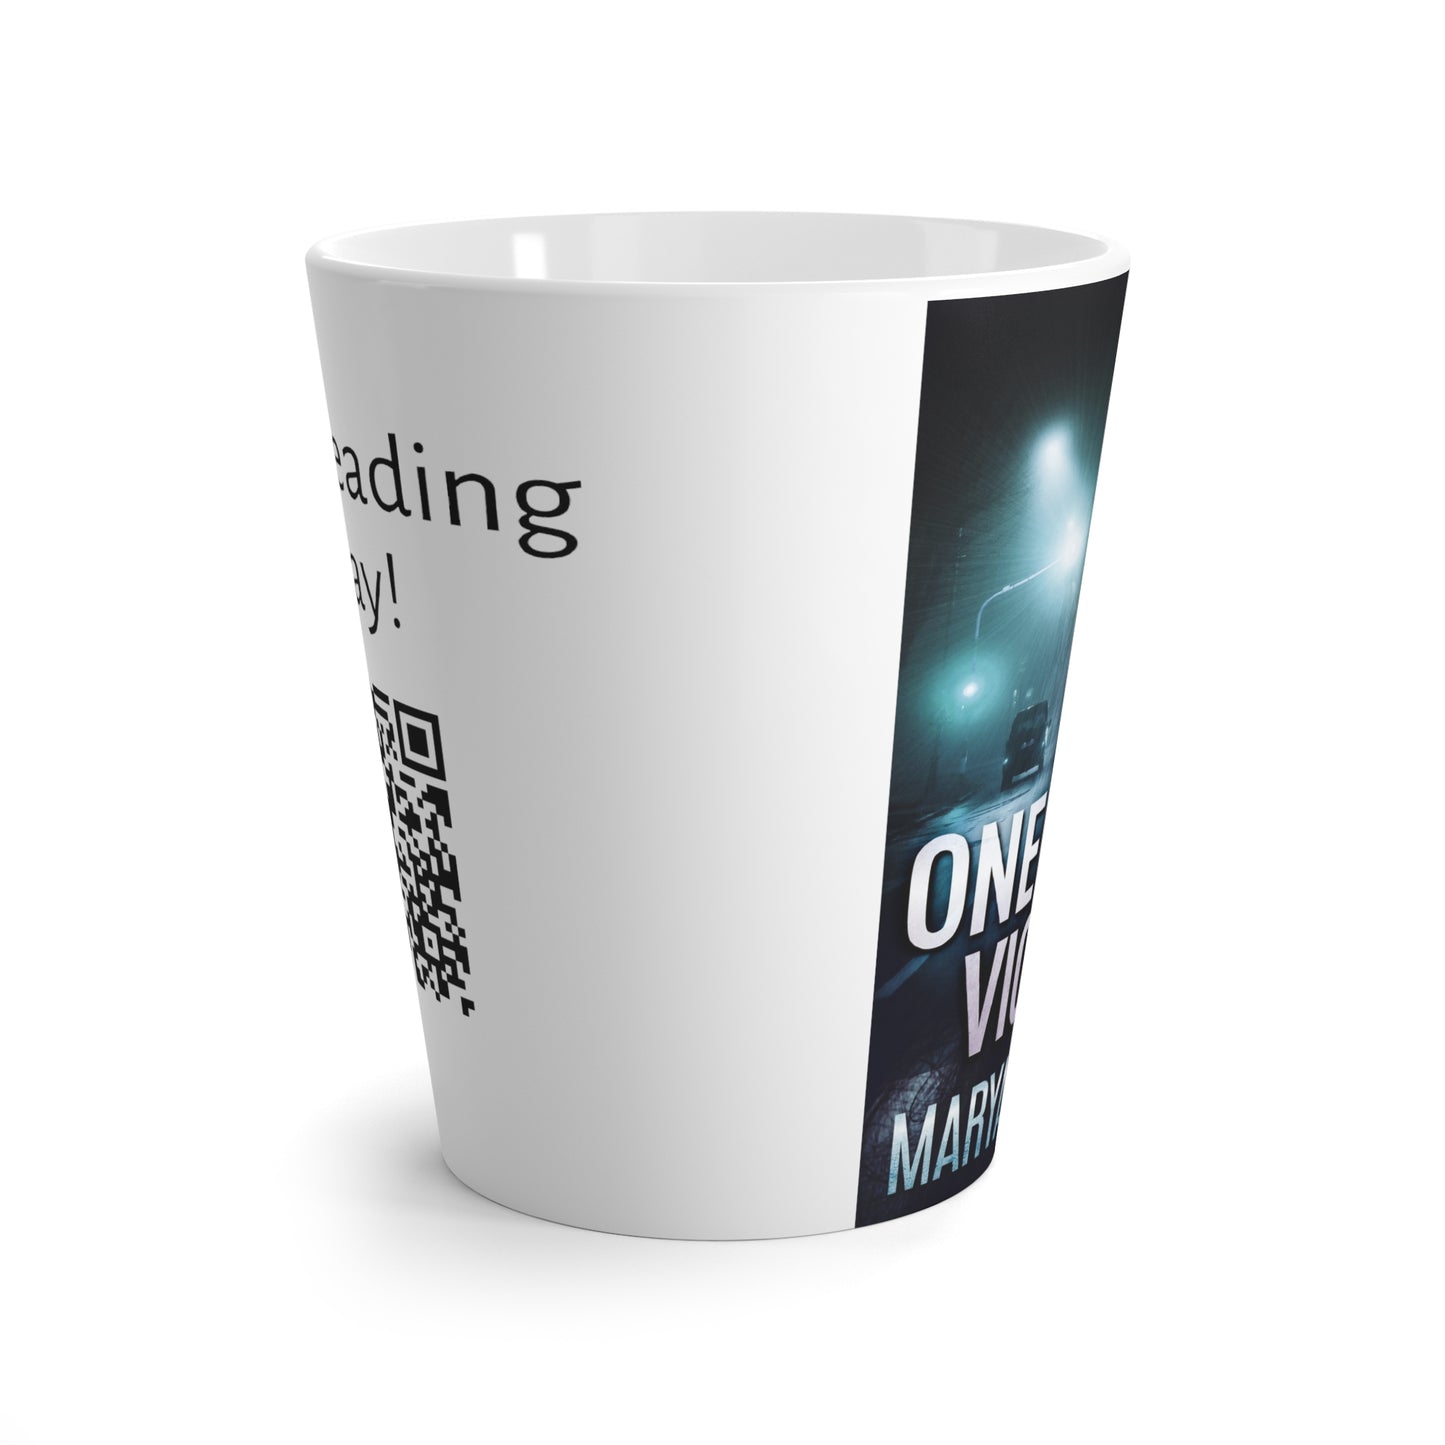 One Small Victory - Latte Mug